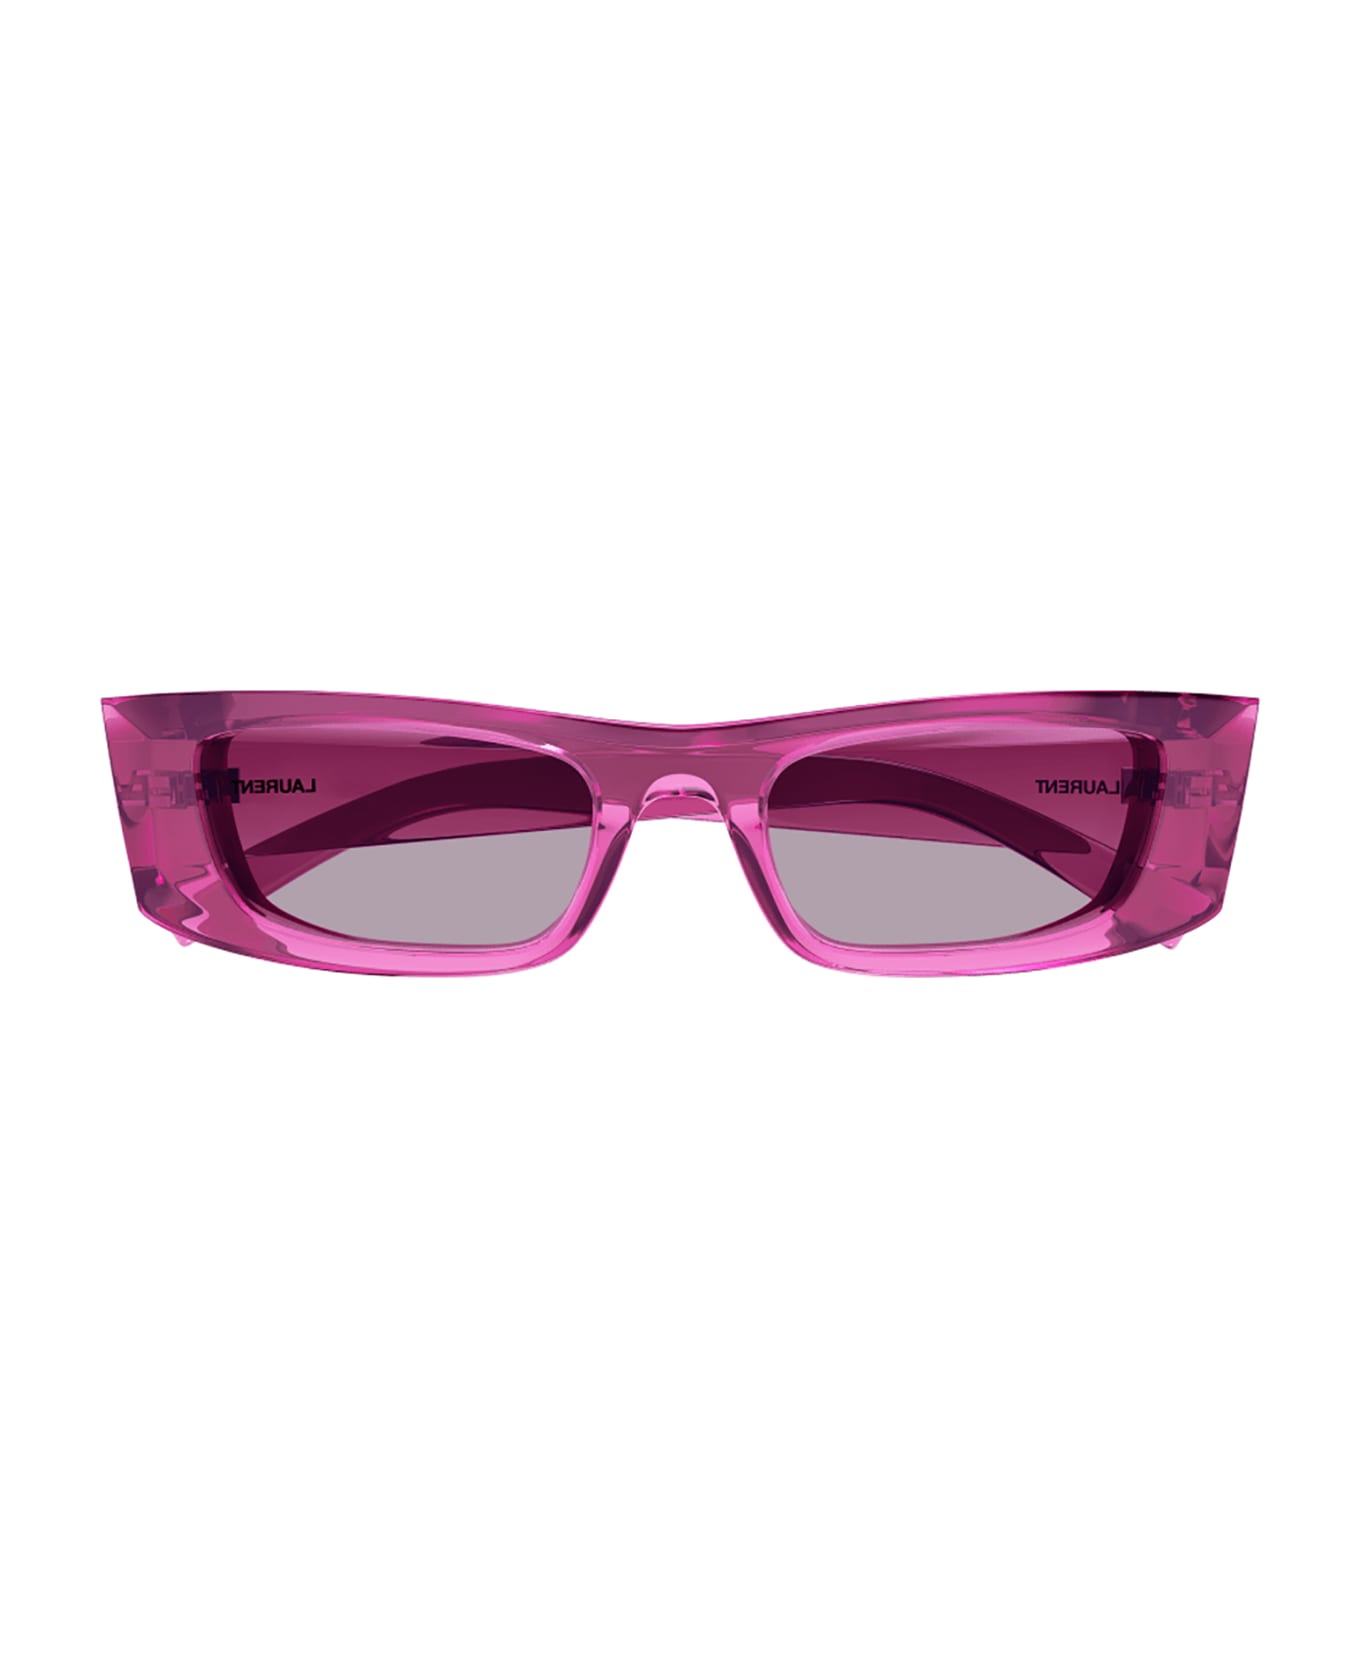 Saint Laurent Eyewear SL 553 Sunglasses - Pink Pink Violet サングラス